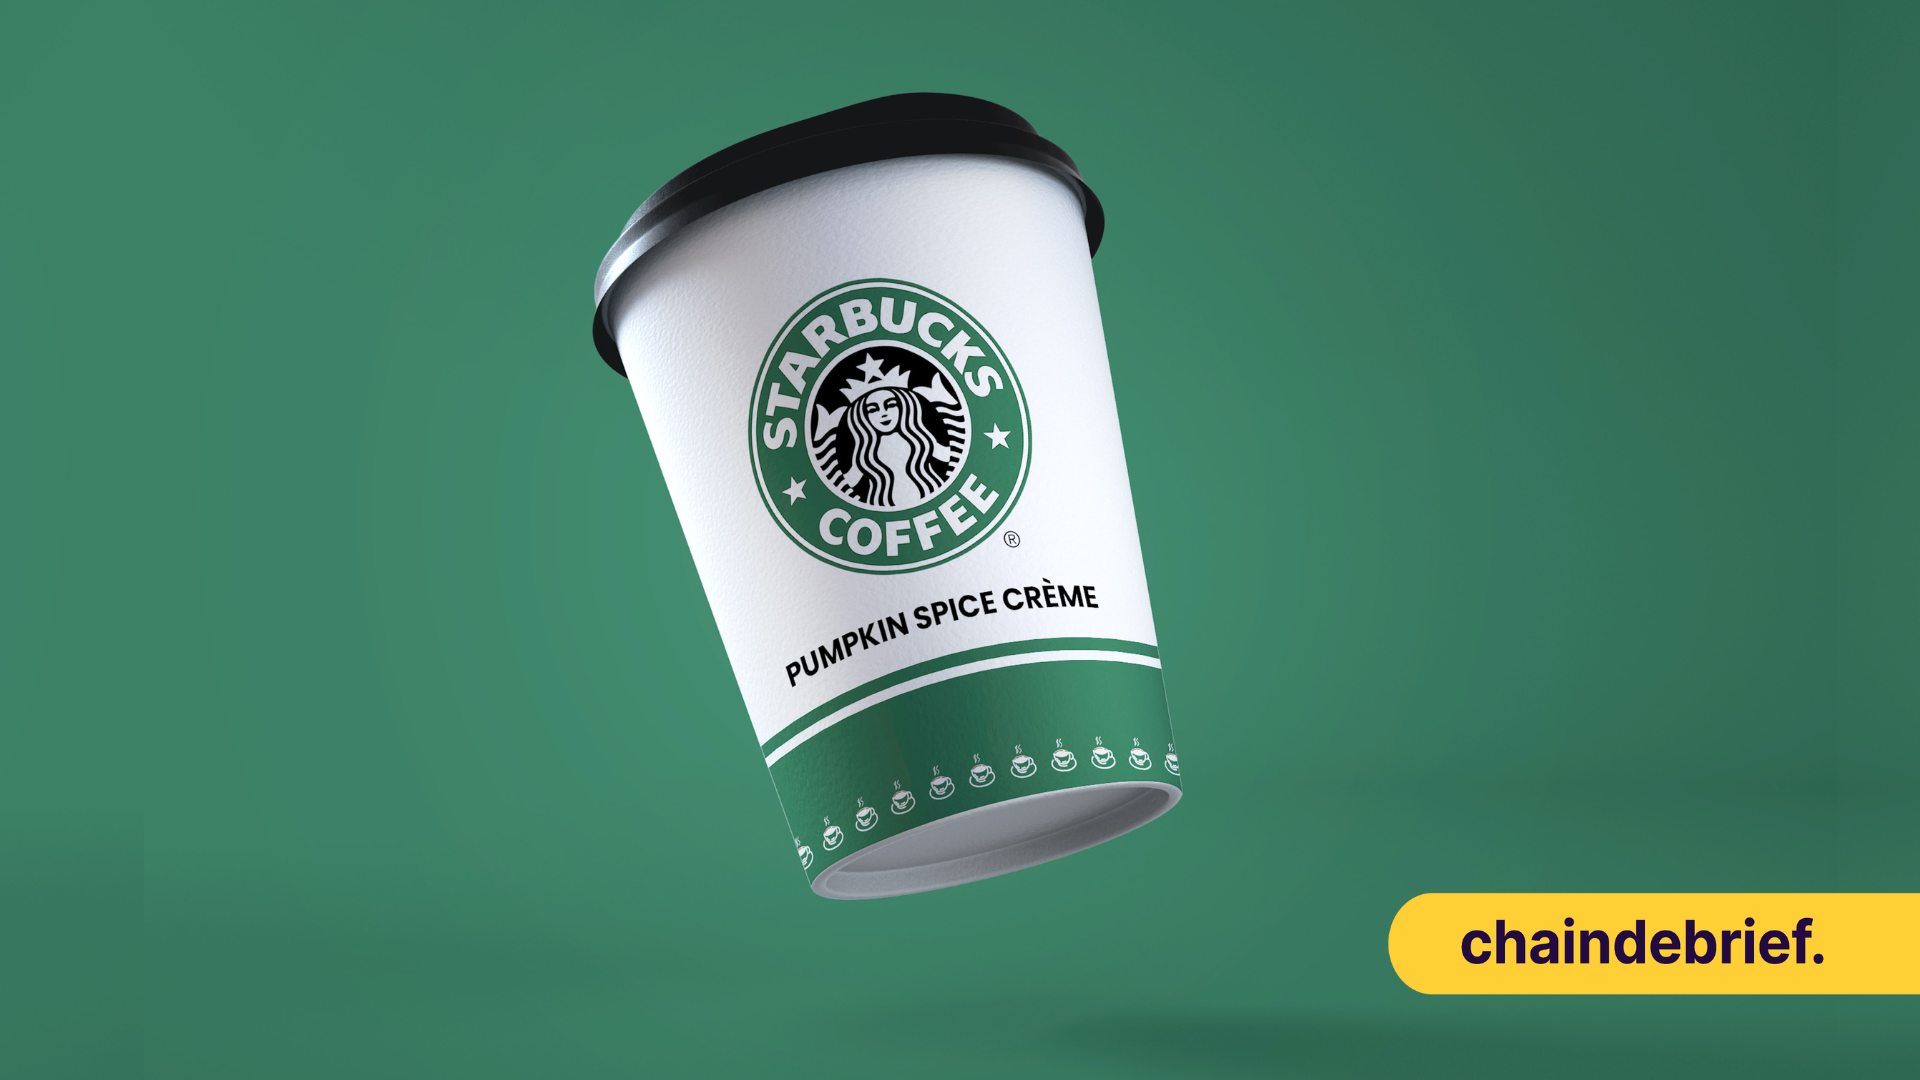 Starbucks Is Brewing A Web3 Based Rewards Program Using NFTs